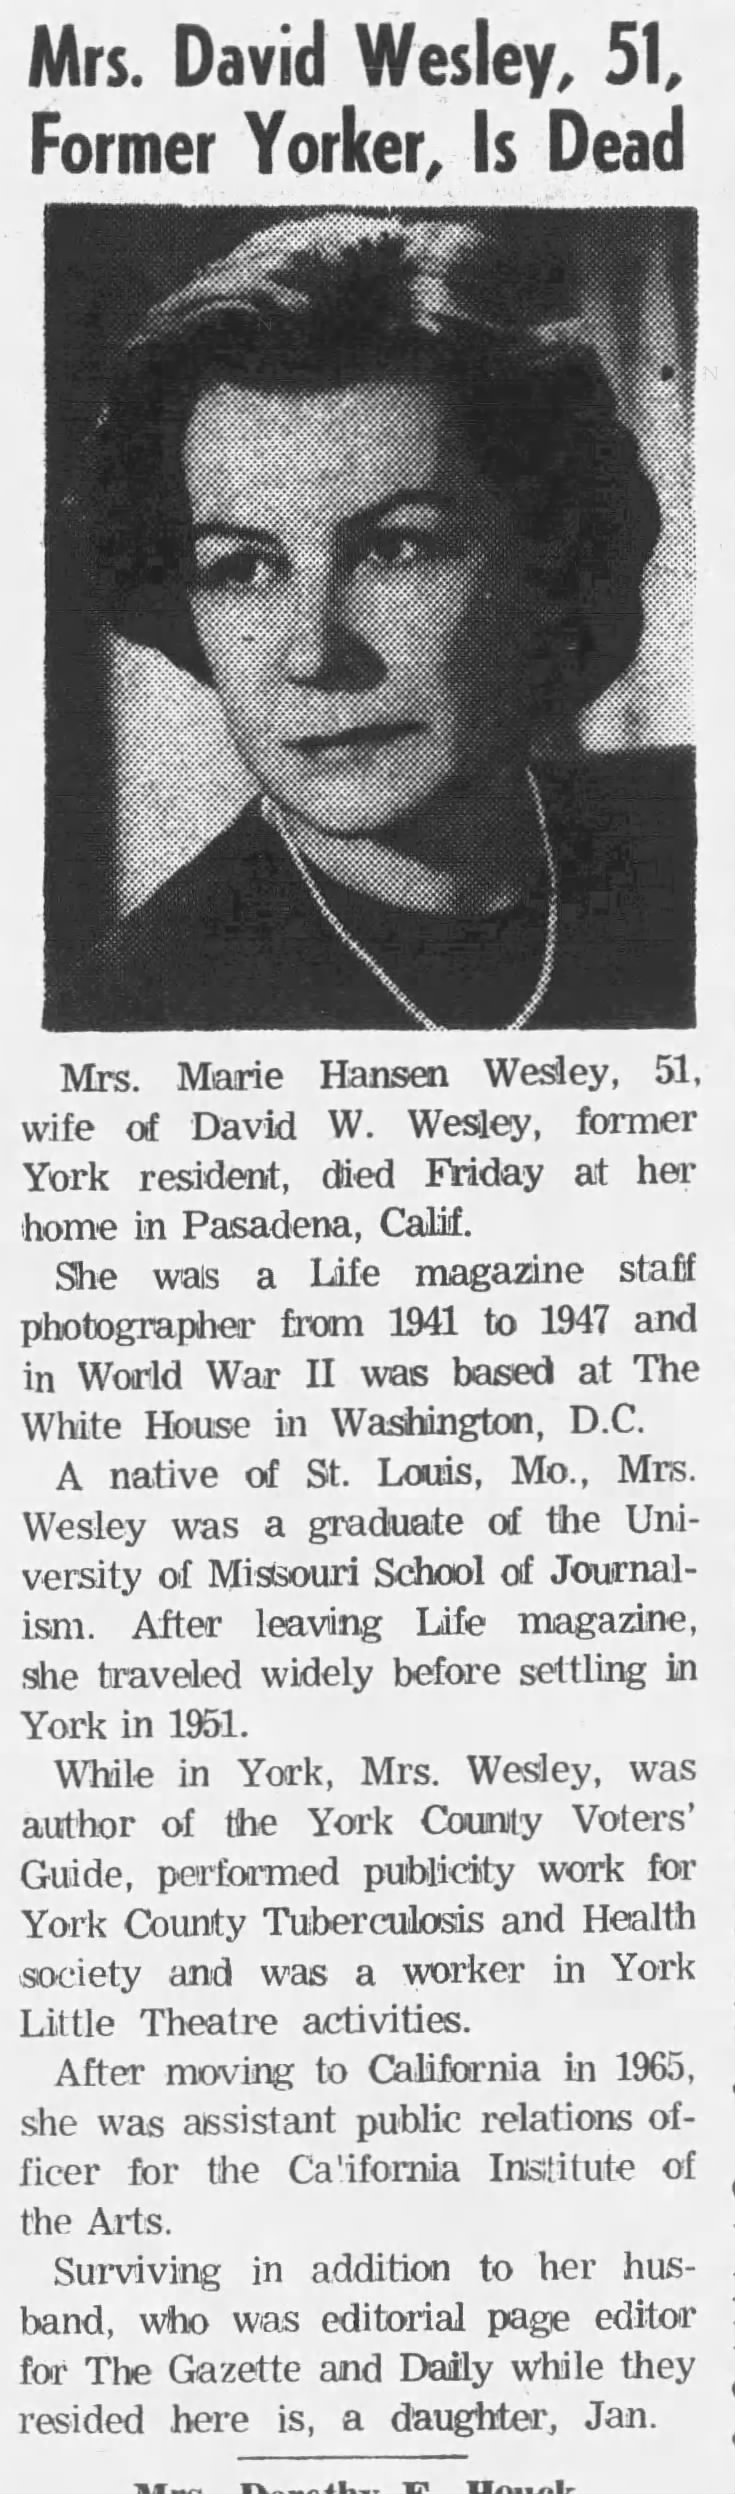 Mrs. David Wesley, 51, Former Yorker, Is Dead